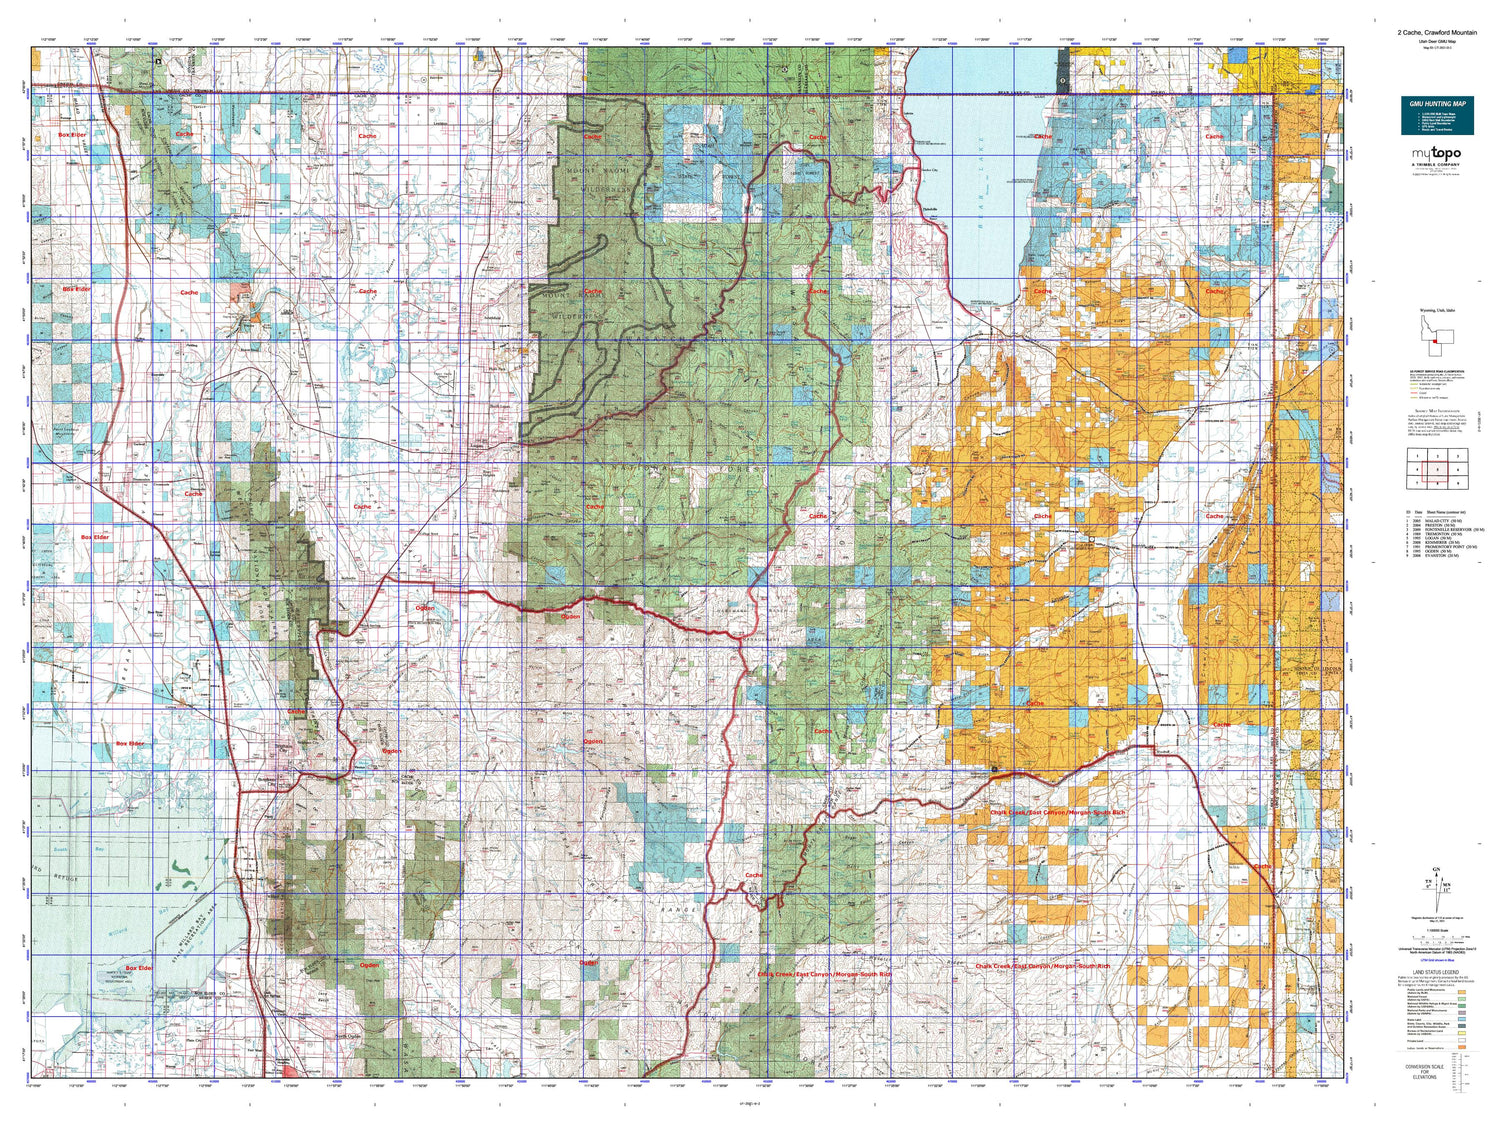 Utah Deer GMU 2 Cache, Crawford Mountain Map Image